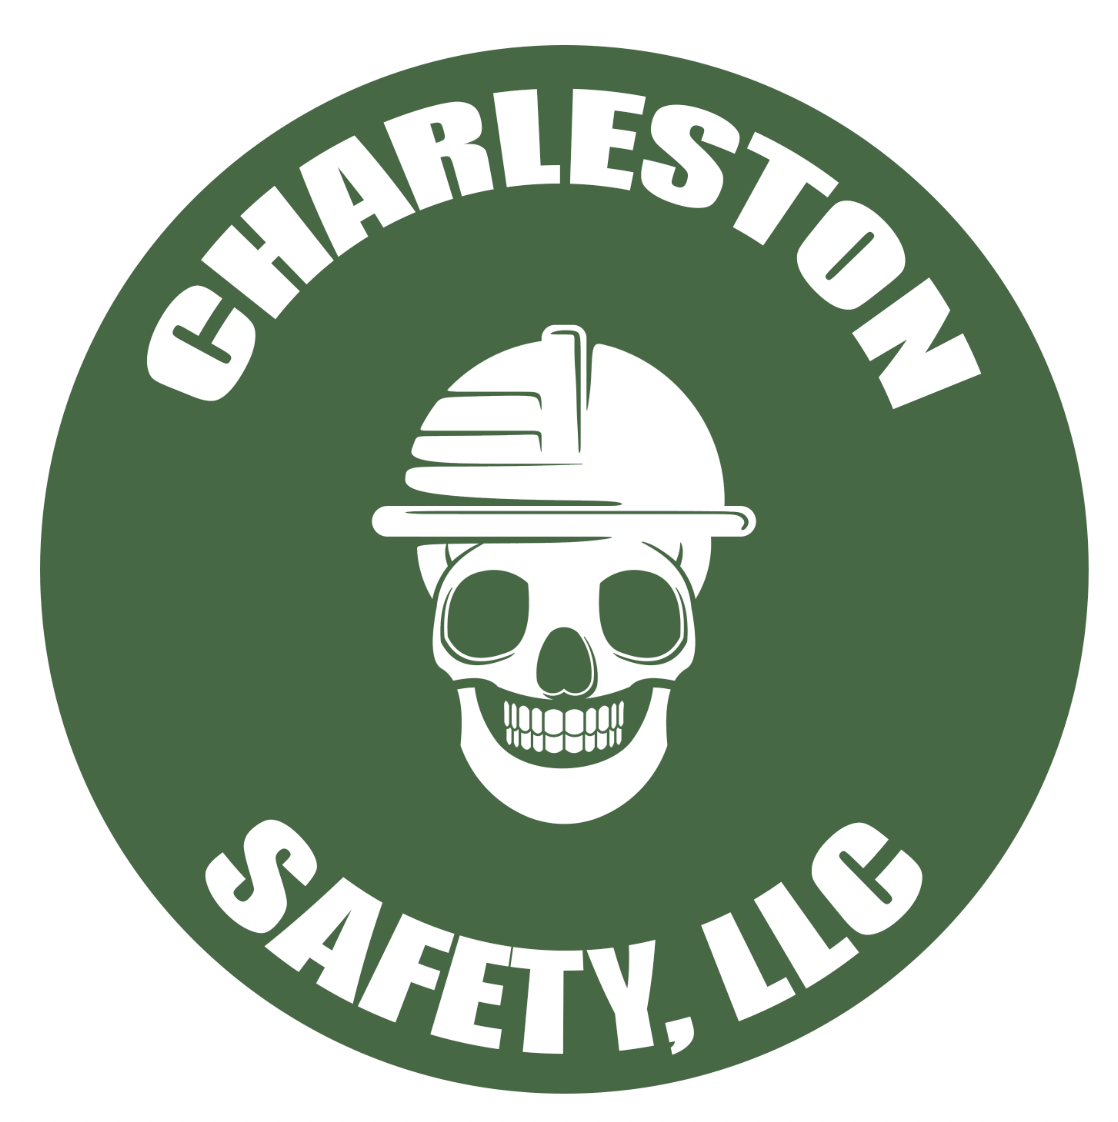 Charleston Safety, LLC Worksite Inspection - Sitework - duplicate